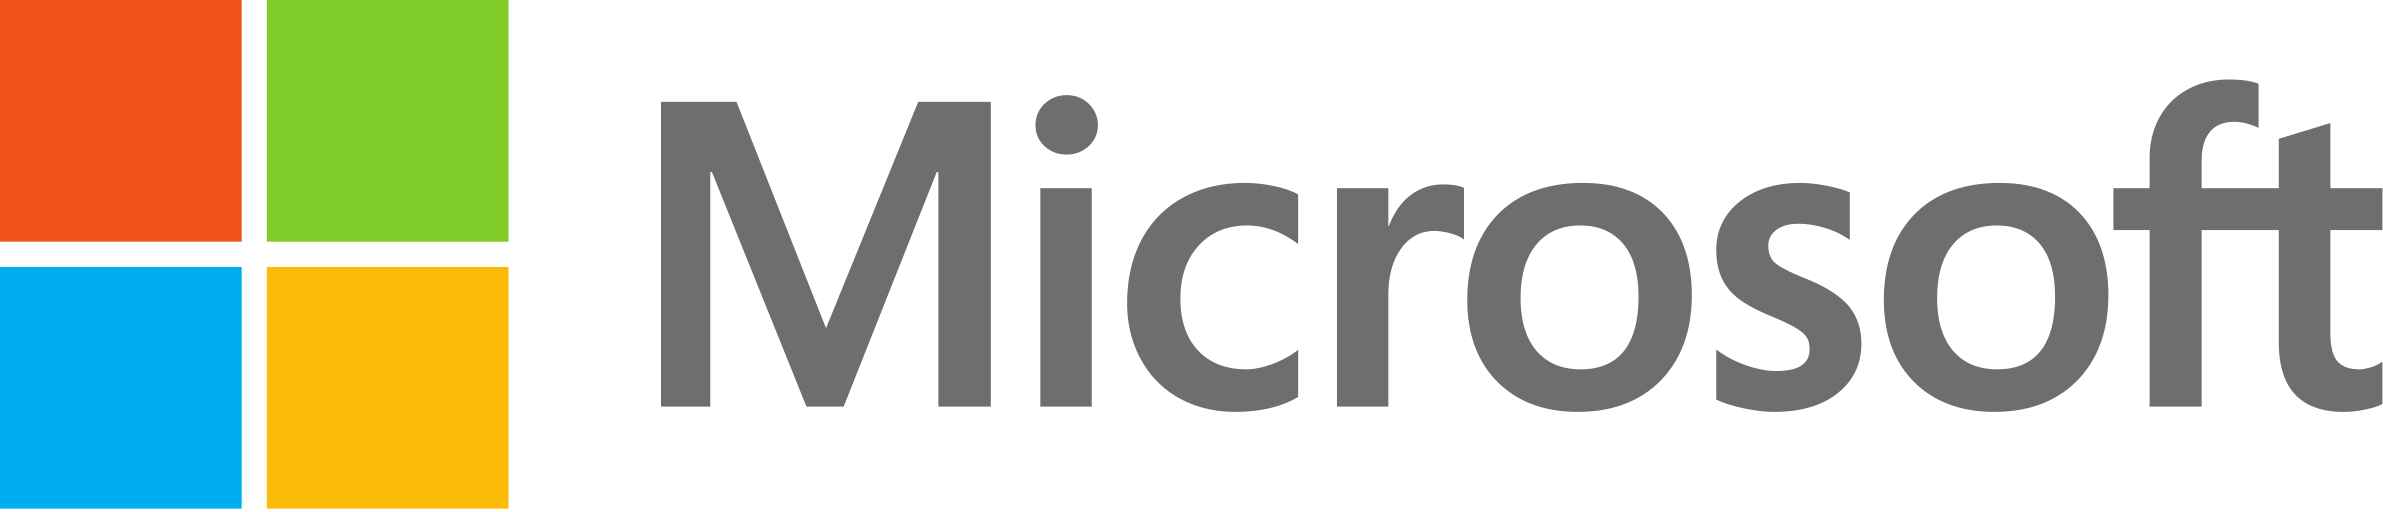 Image of microsoft logo brand for rentals